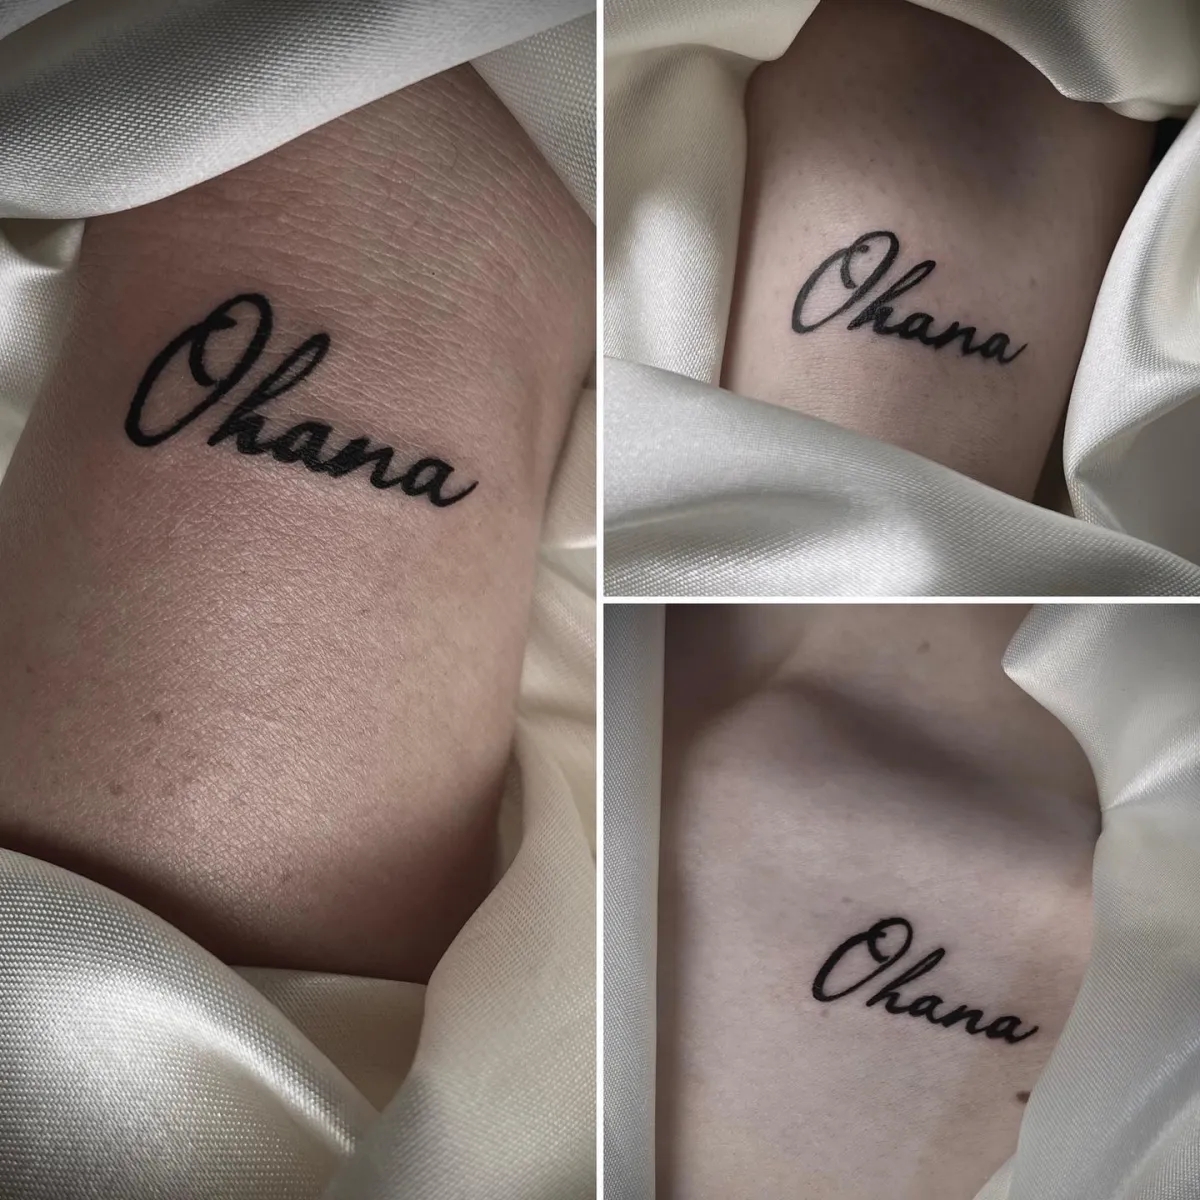 lafillequitatoue tatouage prenom ohana sur la poignet d une femme